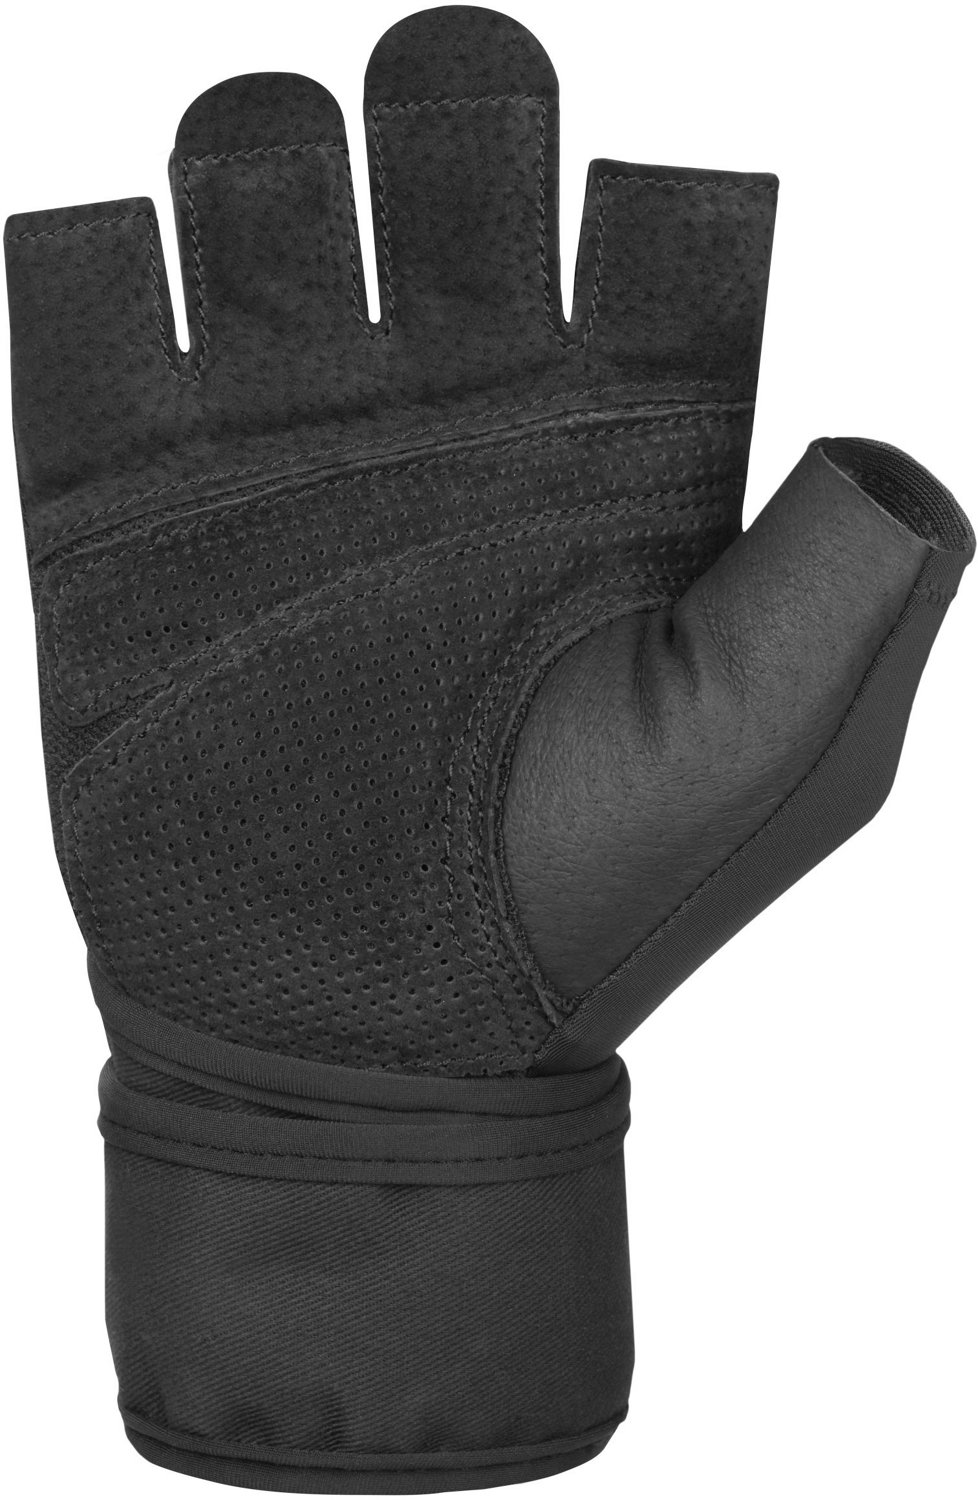 Harbinger Pro WristWrap® Weightlifting Gloves | Academy